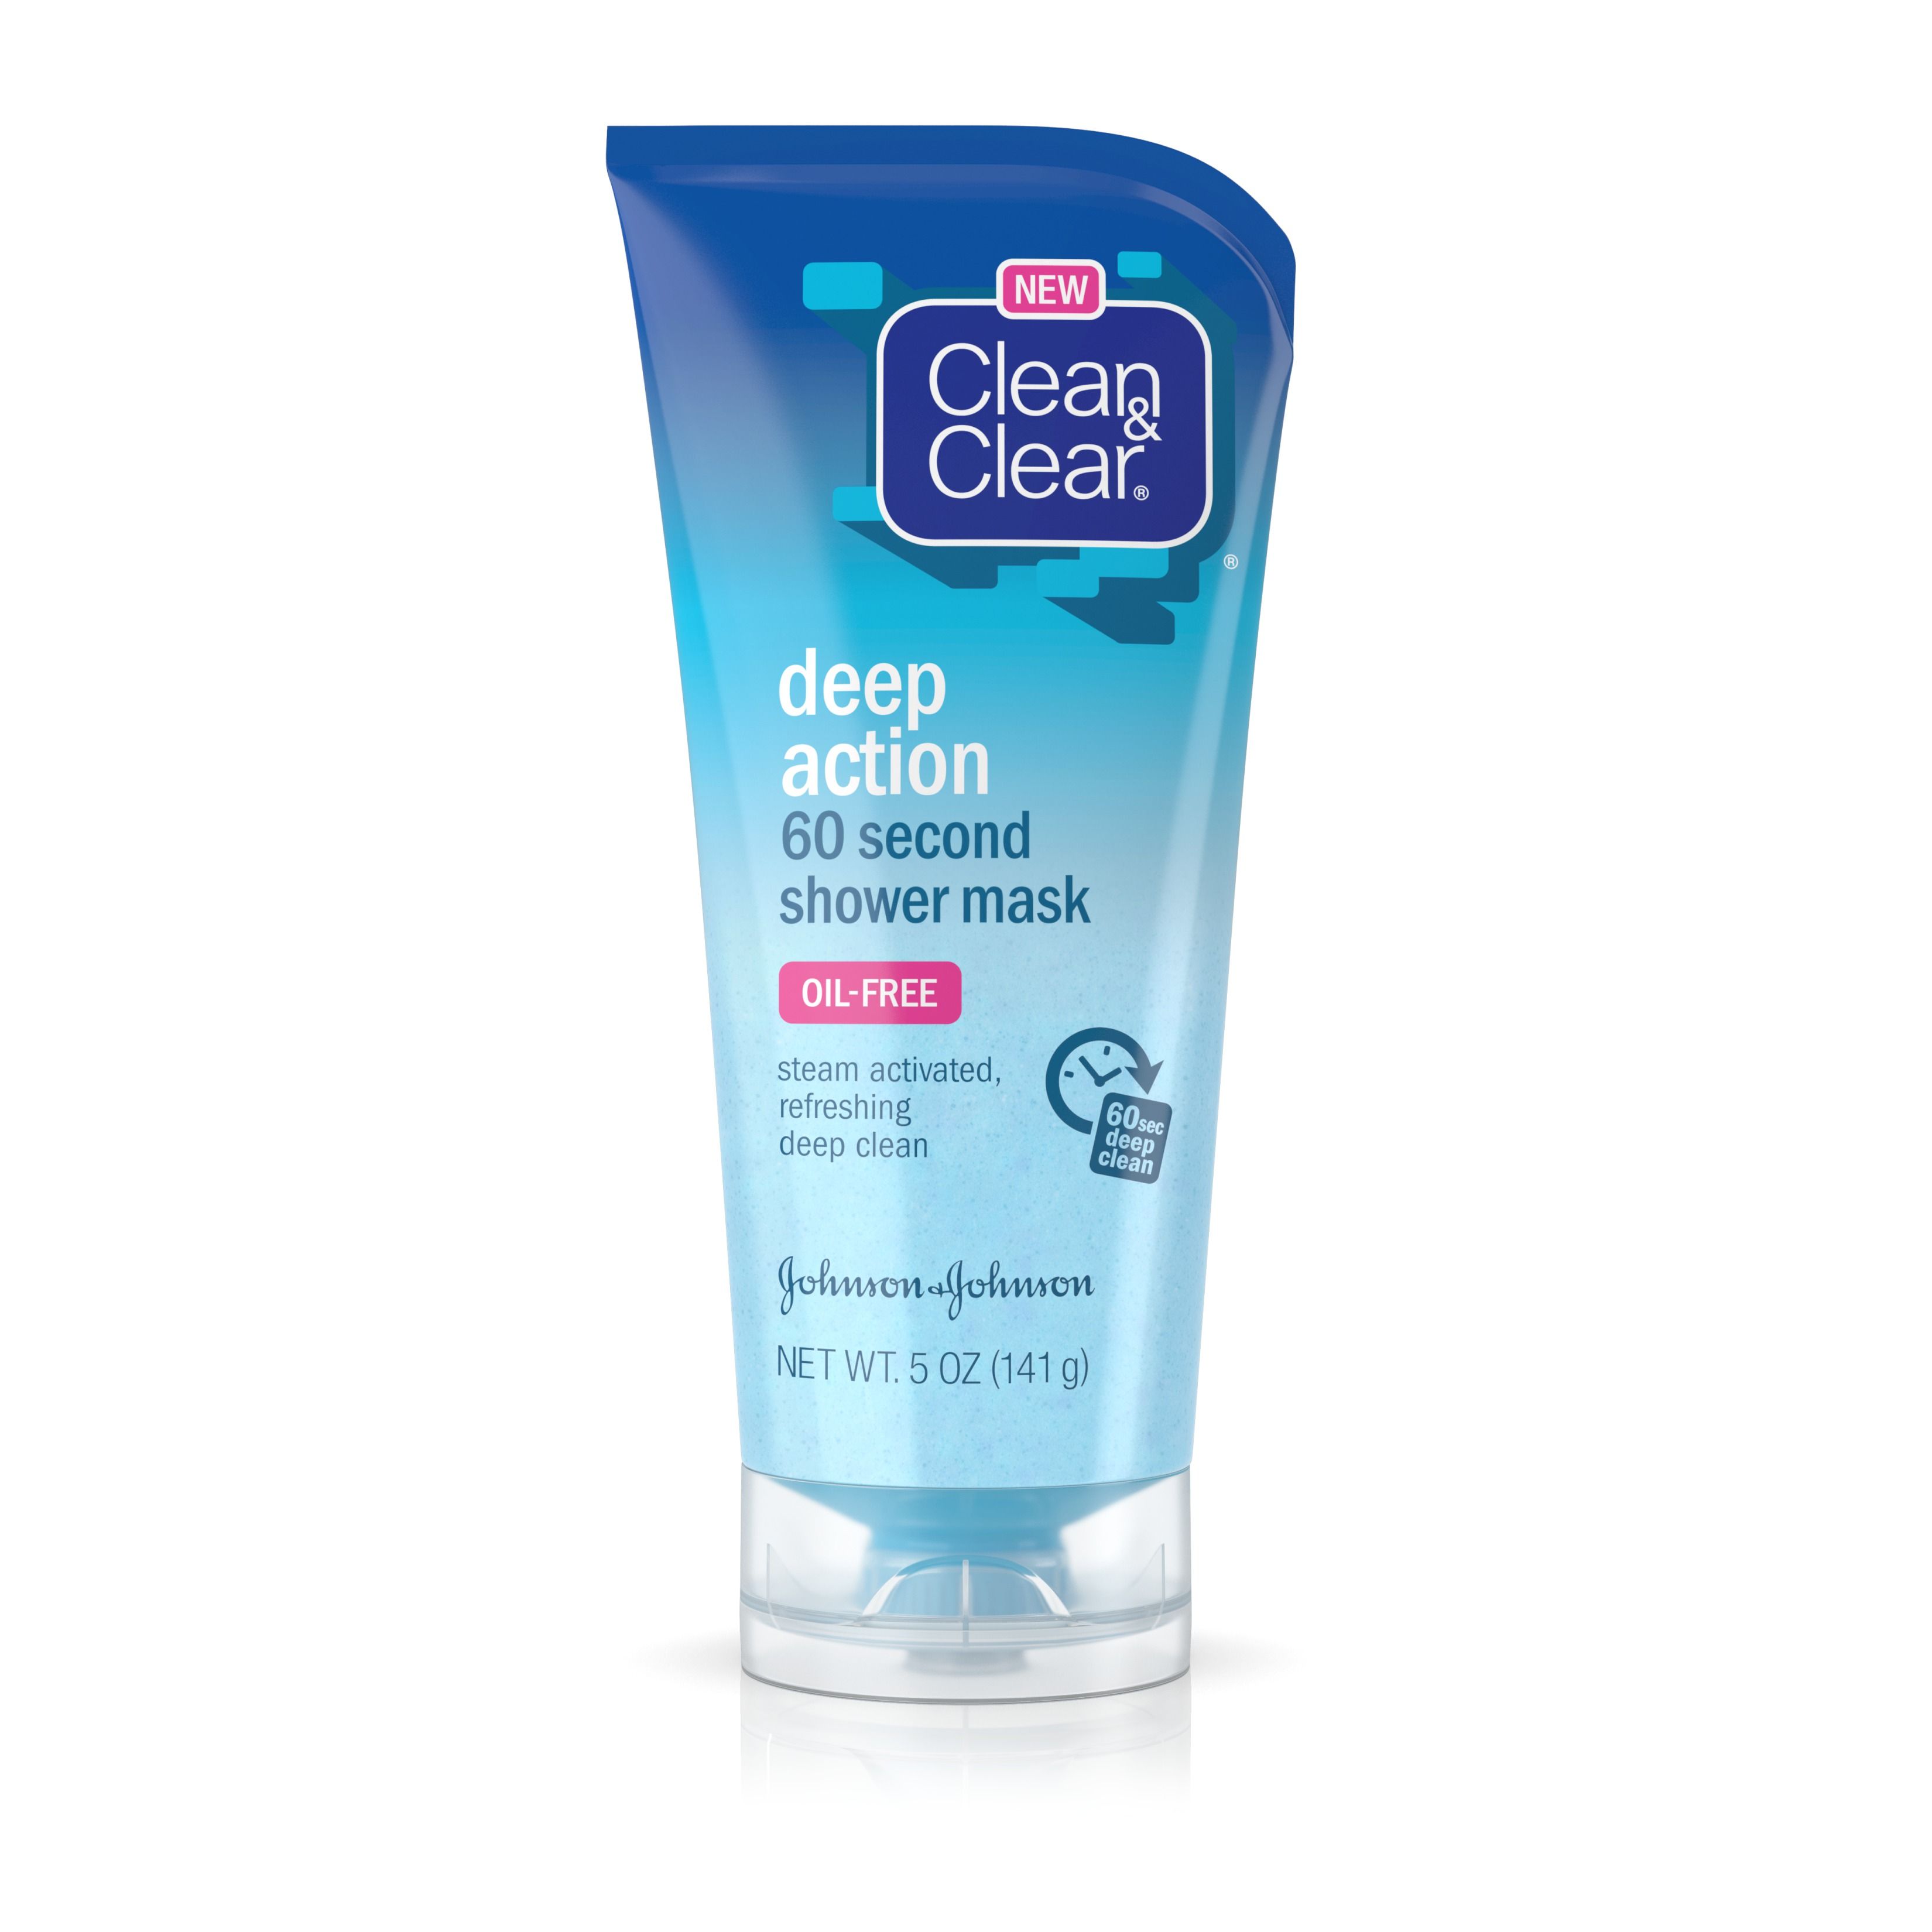 Clean and clear soft steam facial